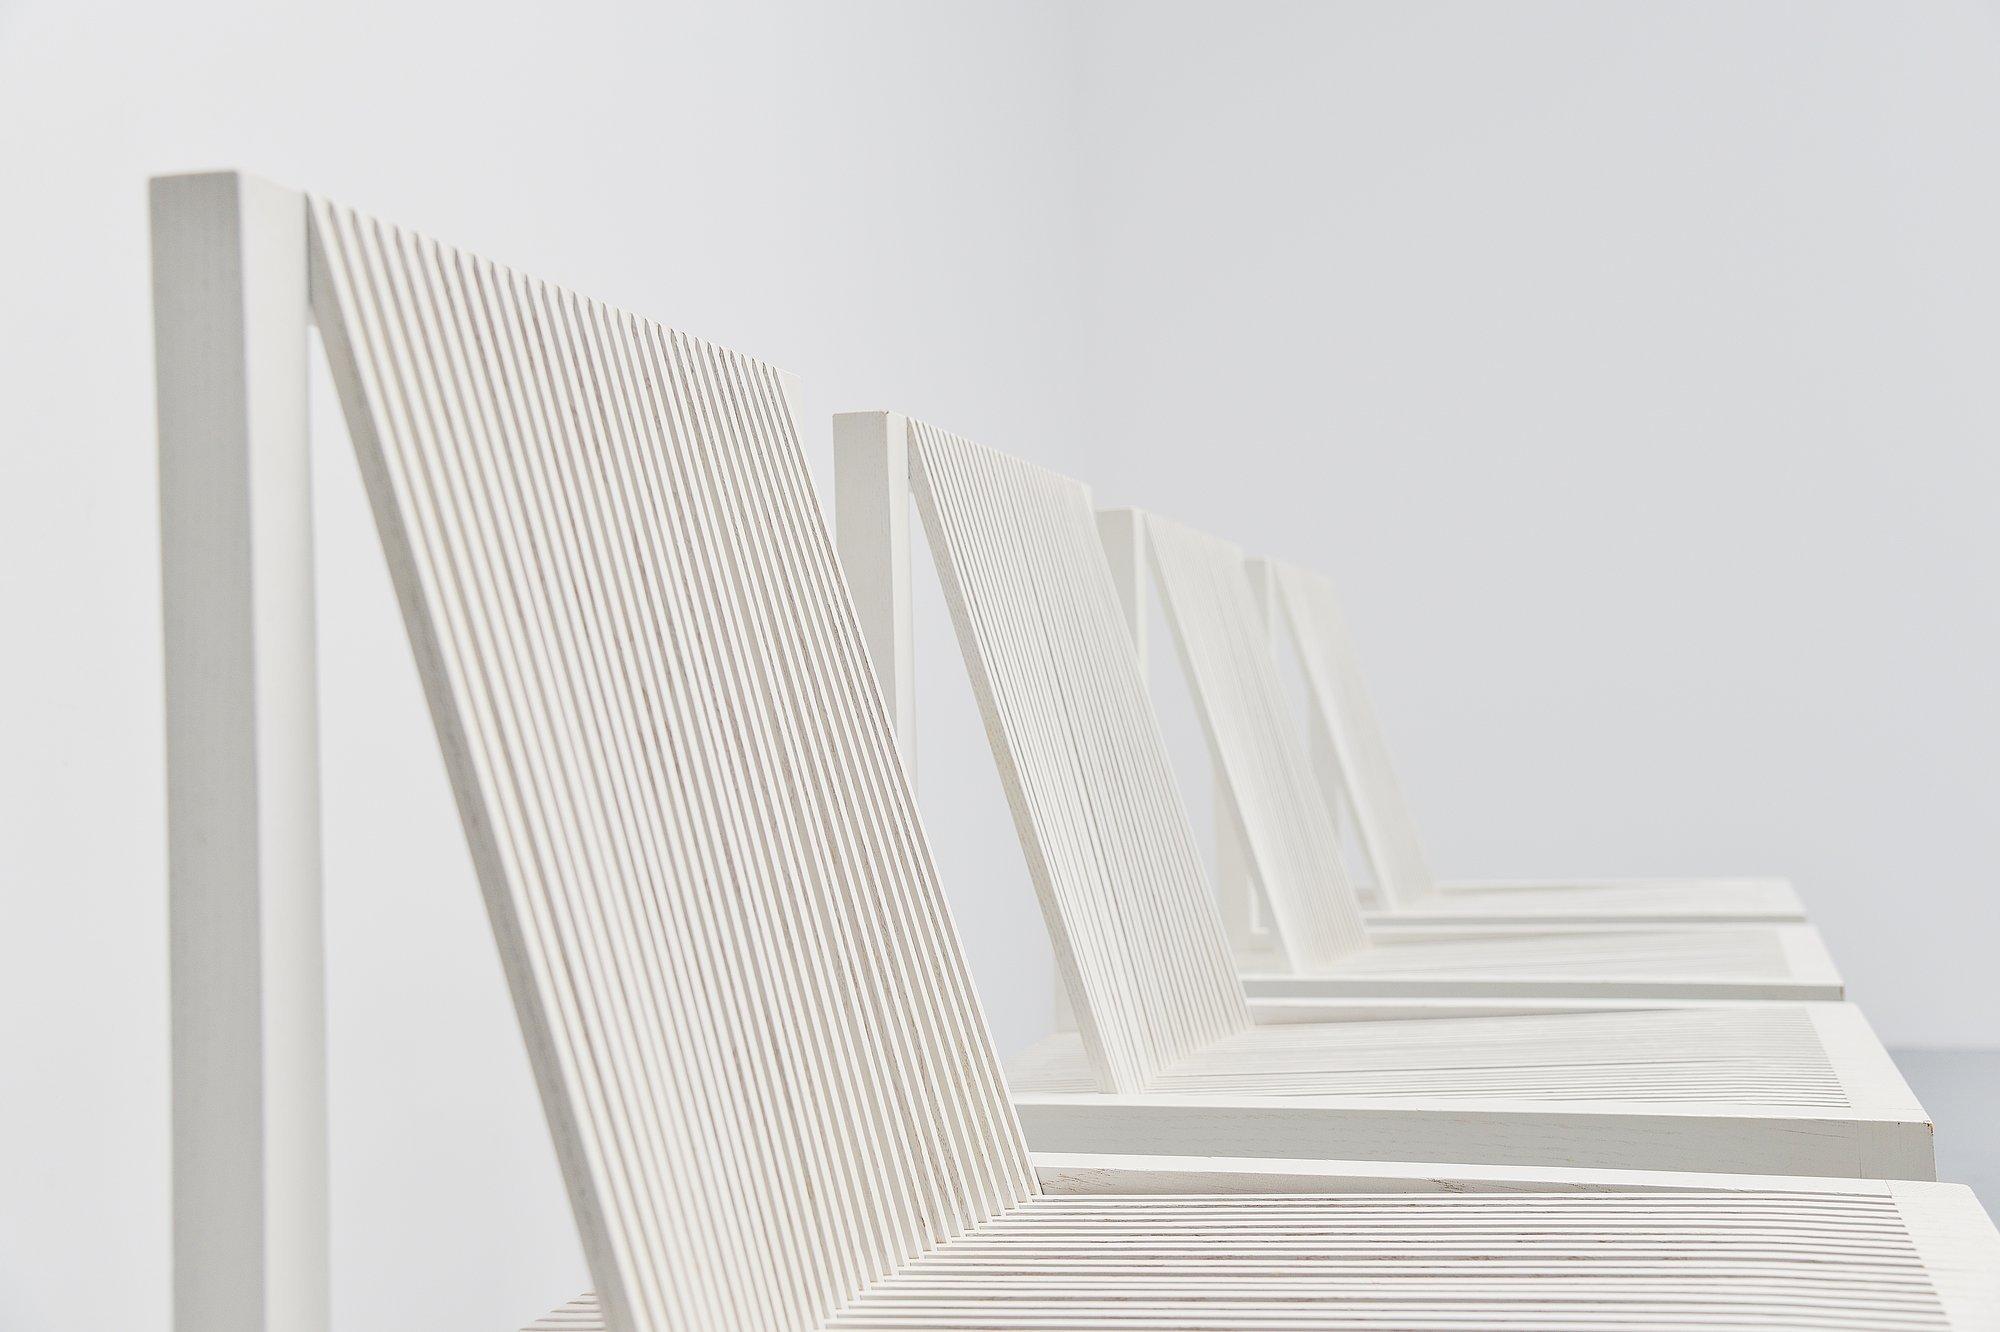 Cold-Painted Ruud Jan Kokke Dining Chairs Metaform 1984